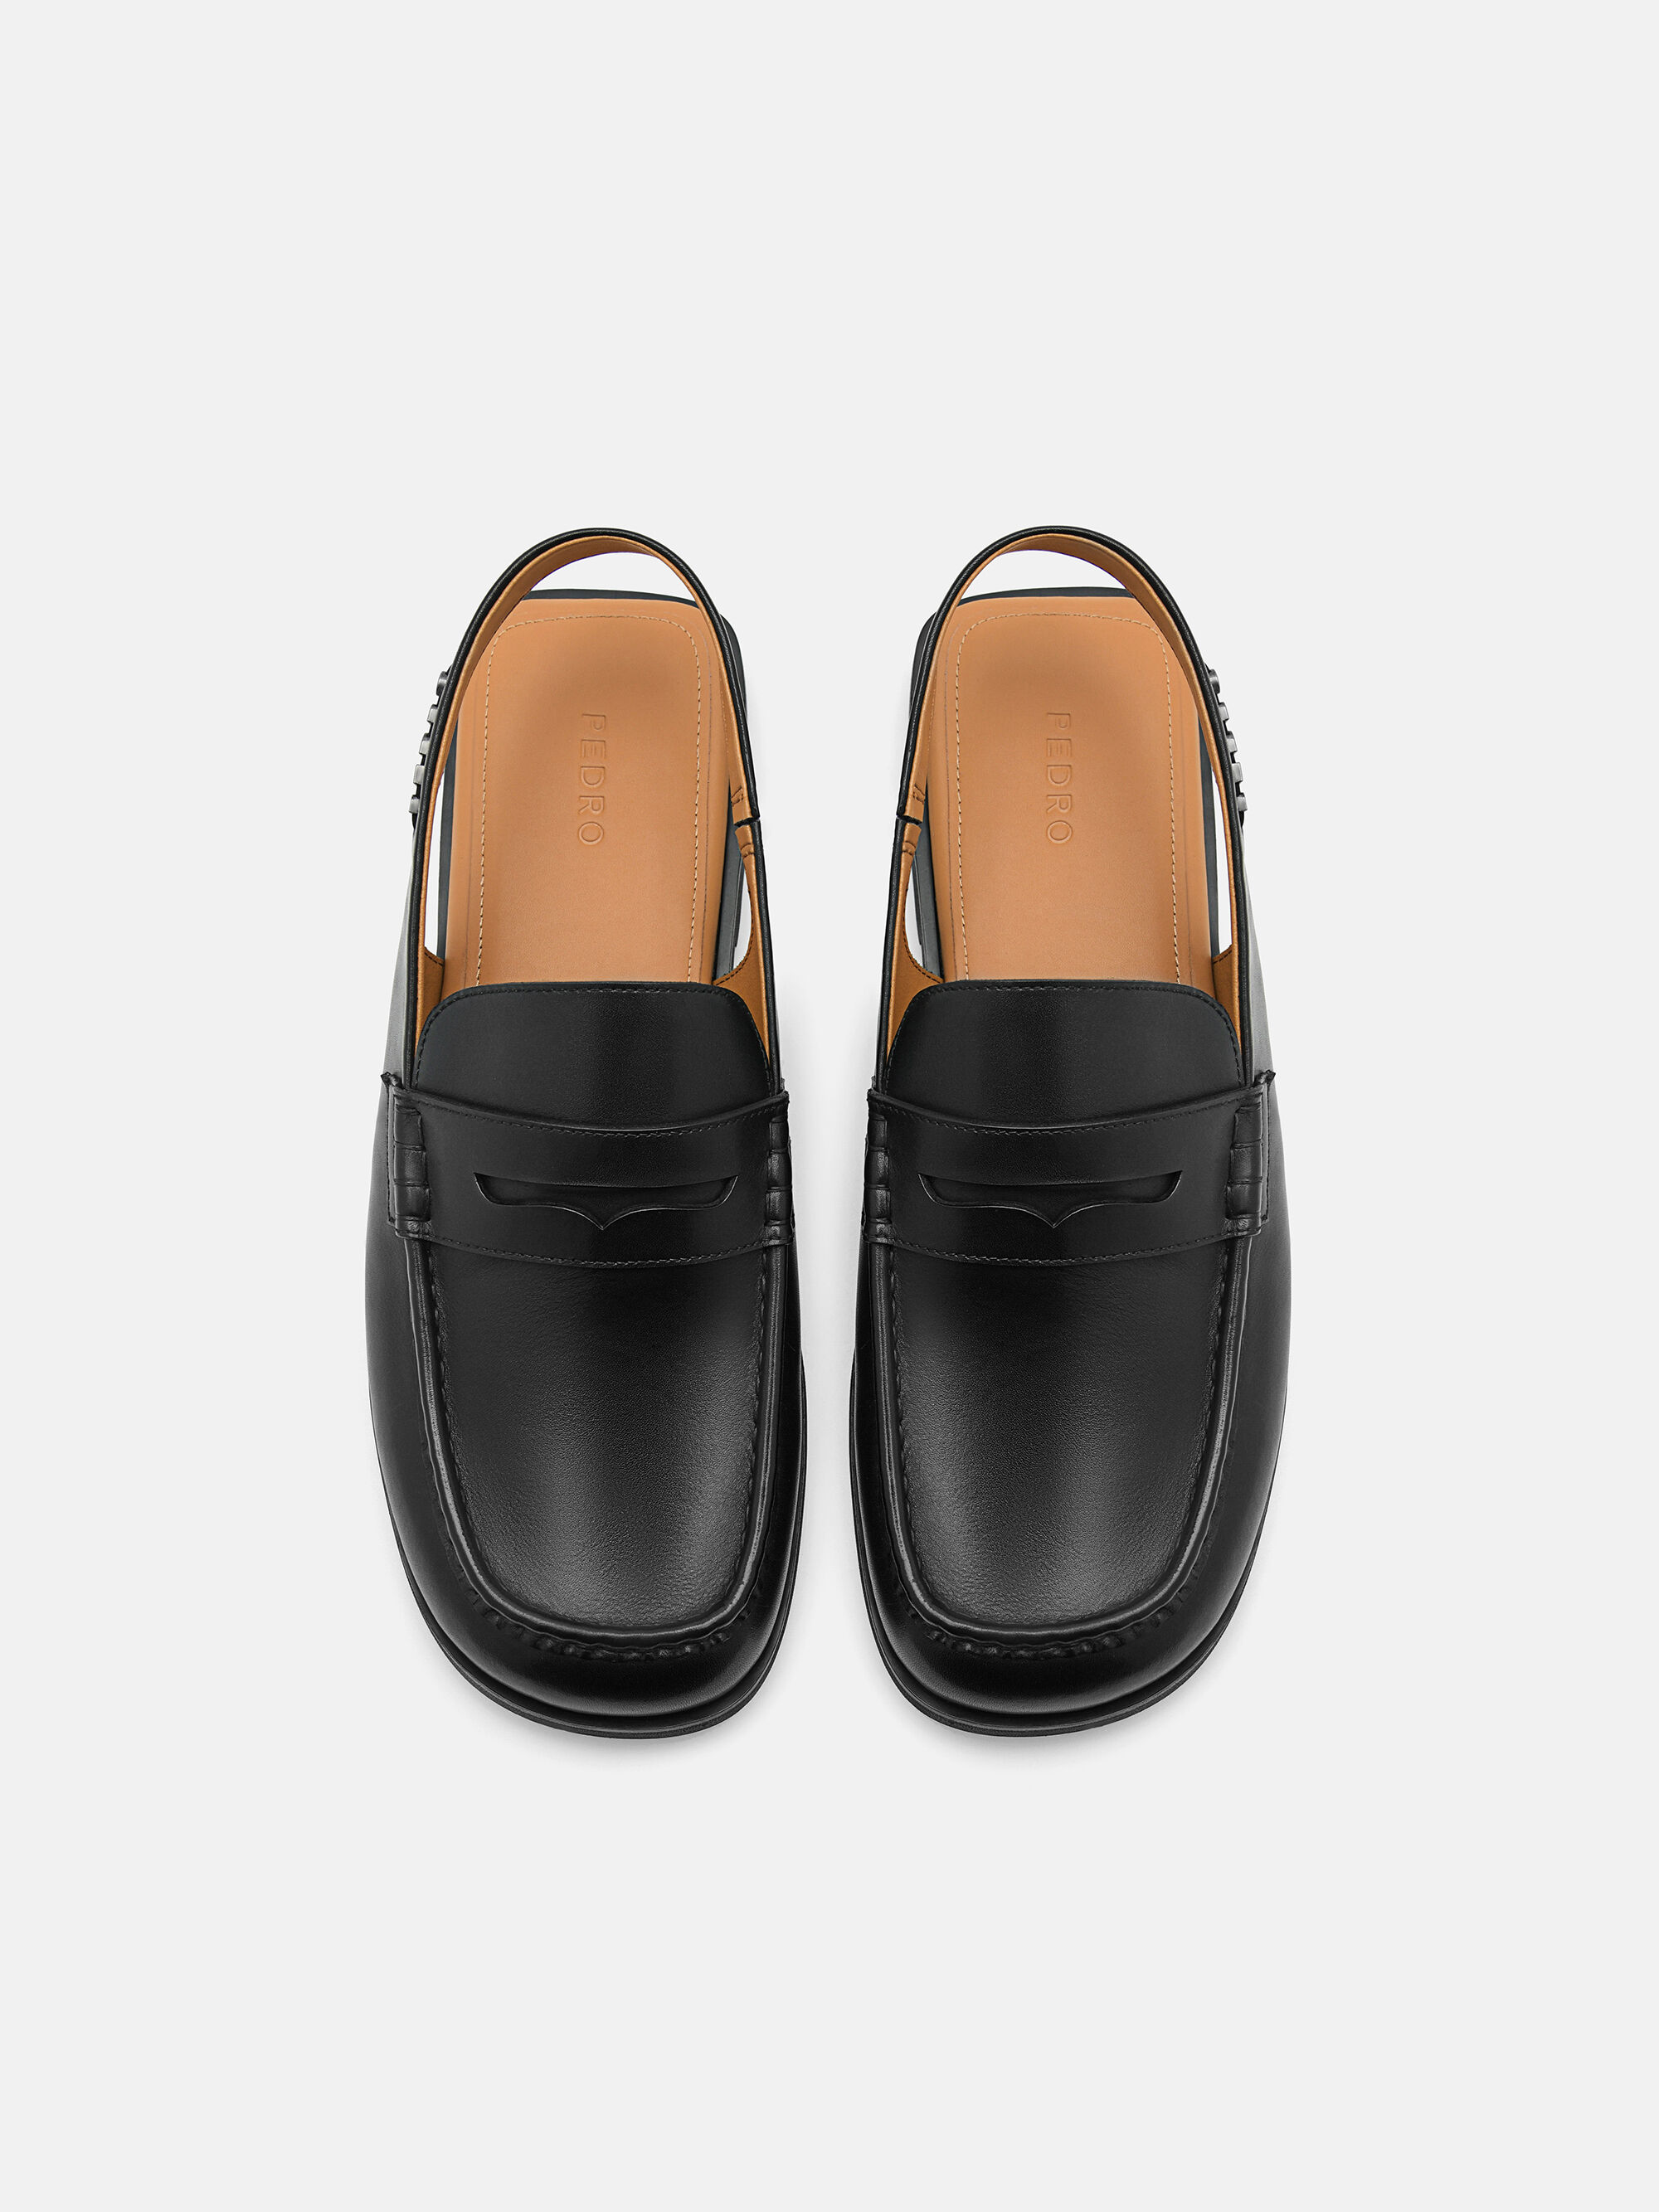 Ewan Leather Penny Loafers, Black